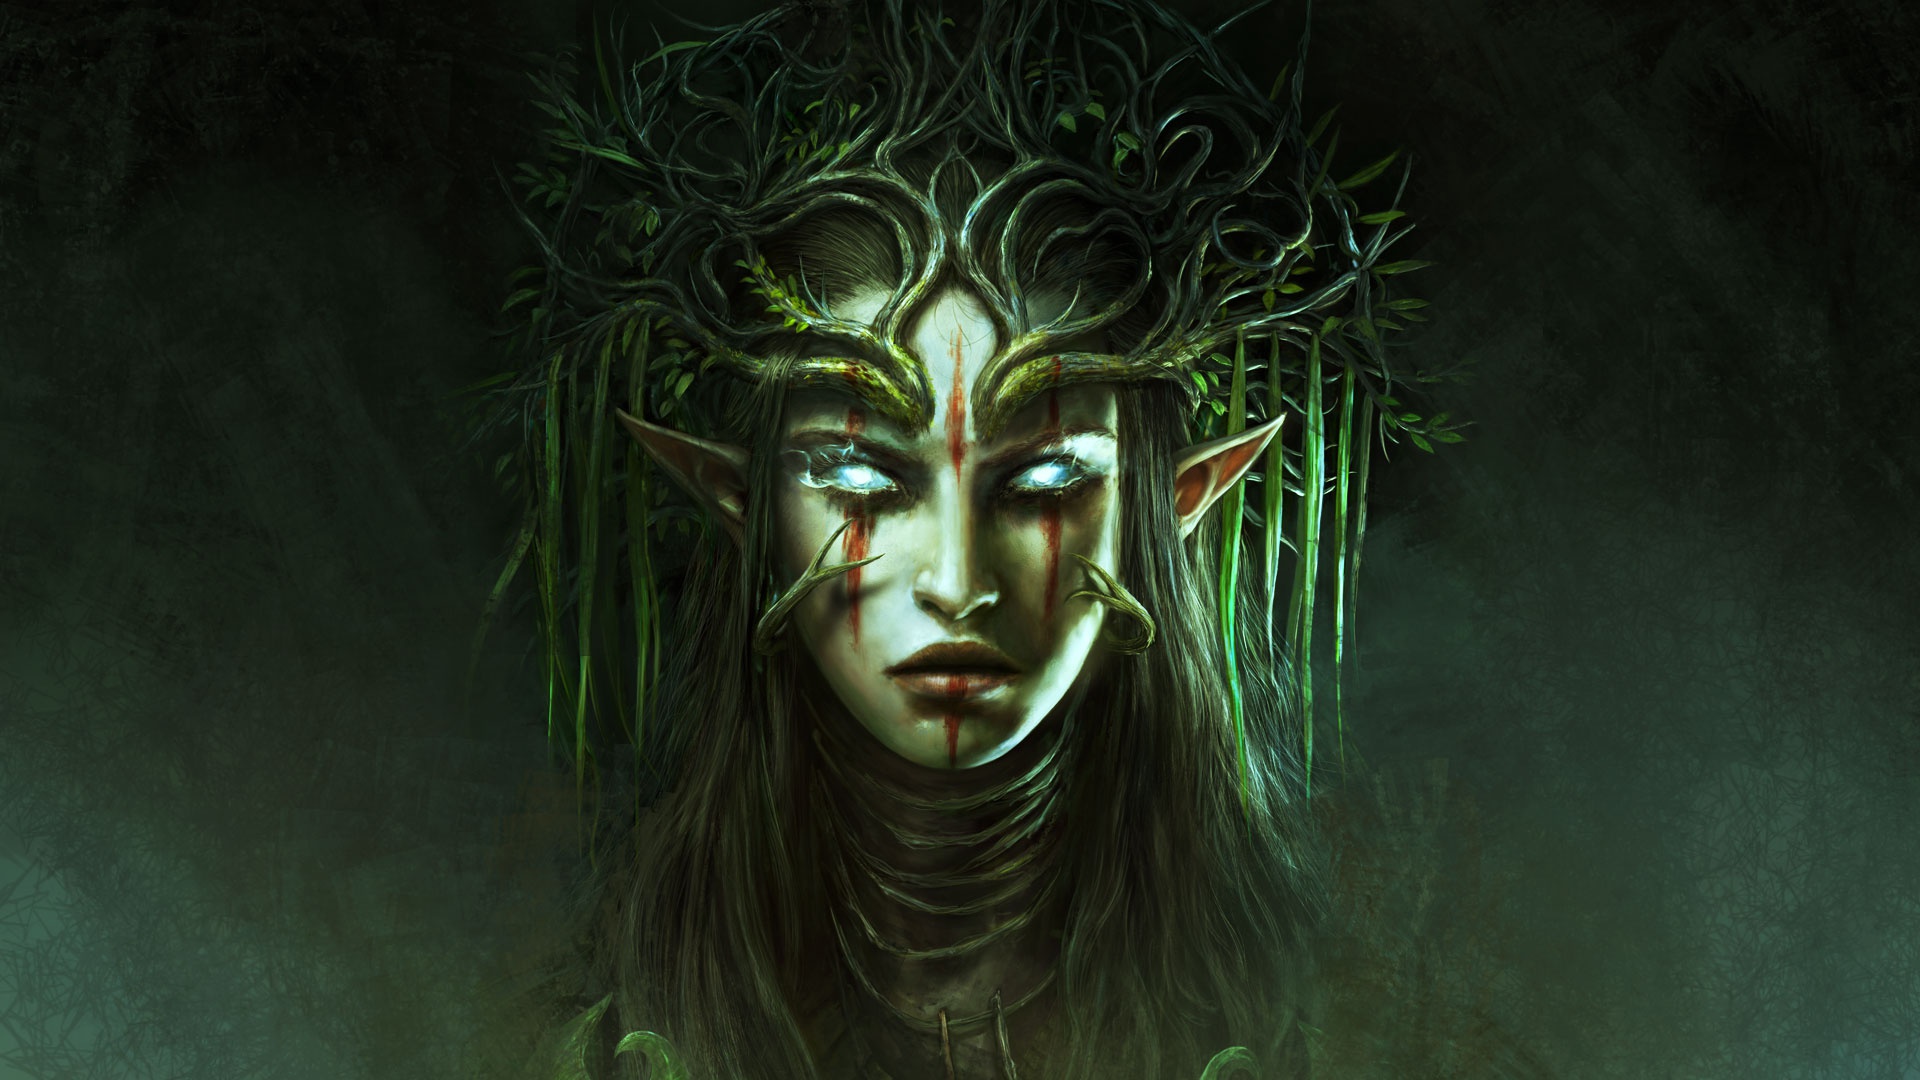 Digital Art Artwork Fantasy Art Video Game Art Divinity Original Sin 2 Elven Pointed Ears Blue Eyes  1920x1080